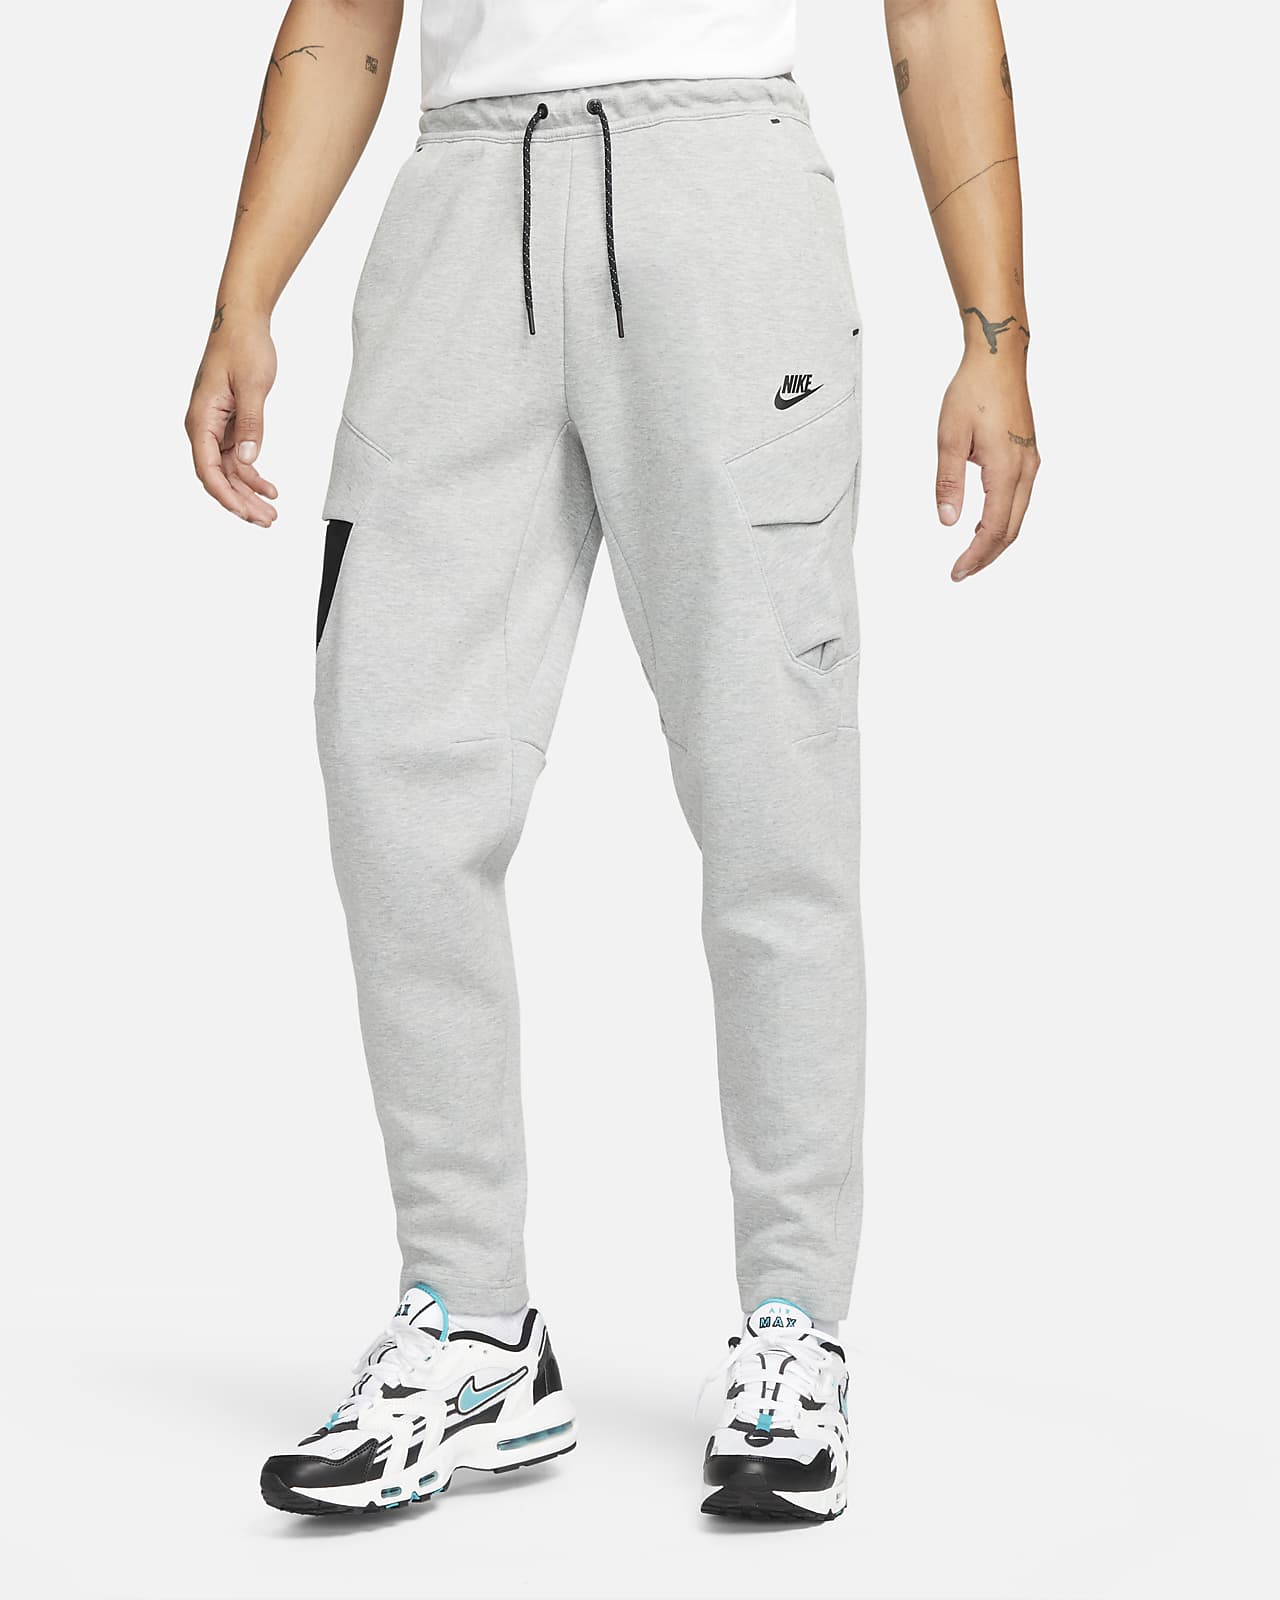 Pantalones para hombre Nike Sportswear Tech Nike.com